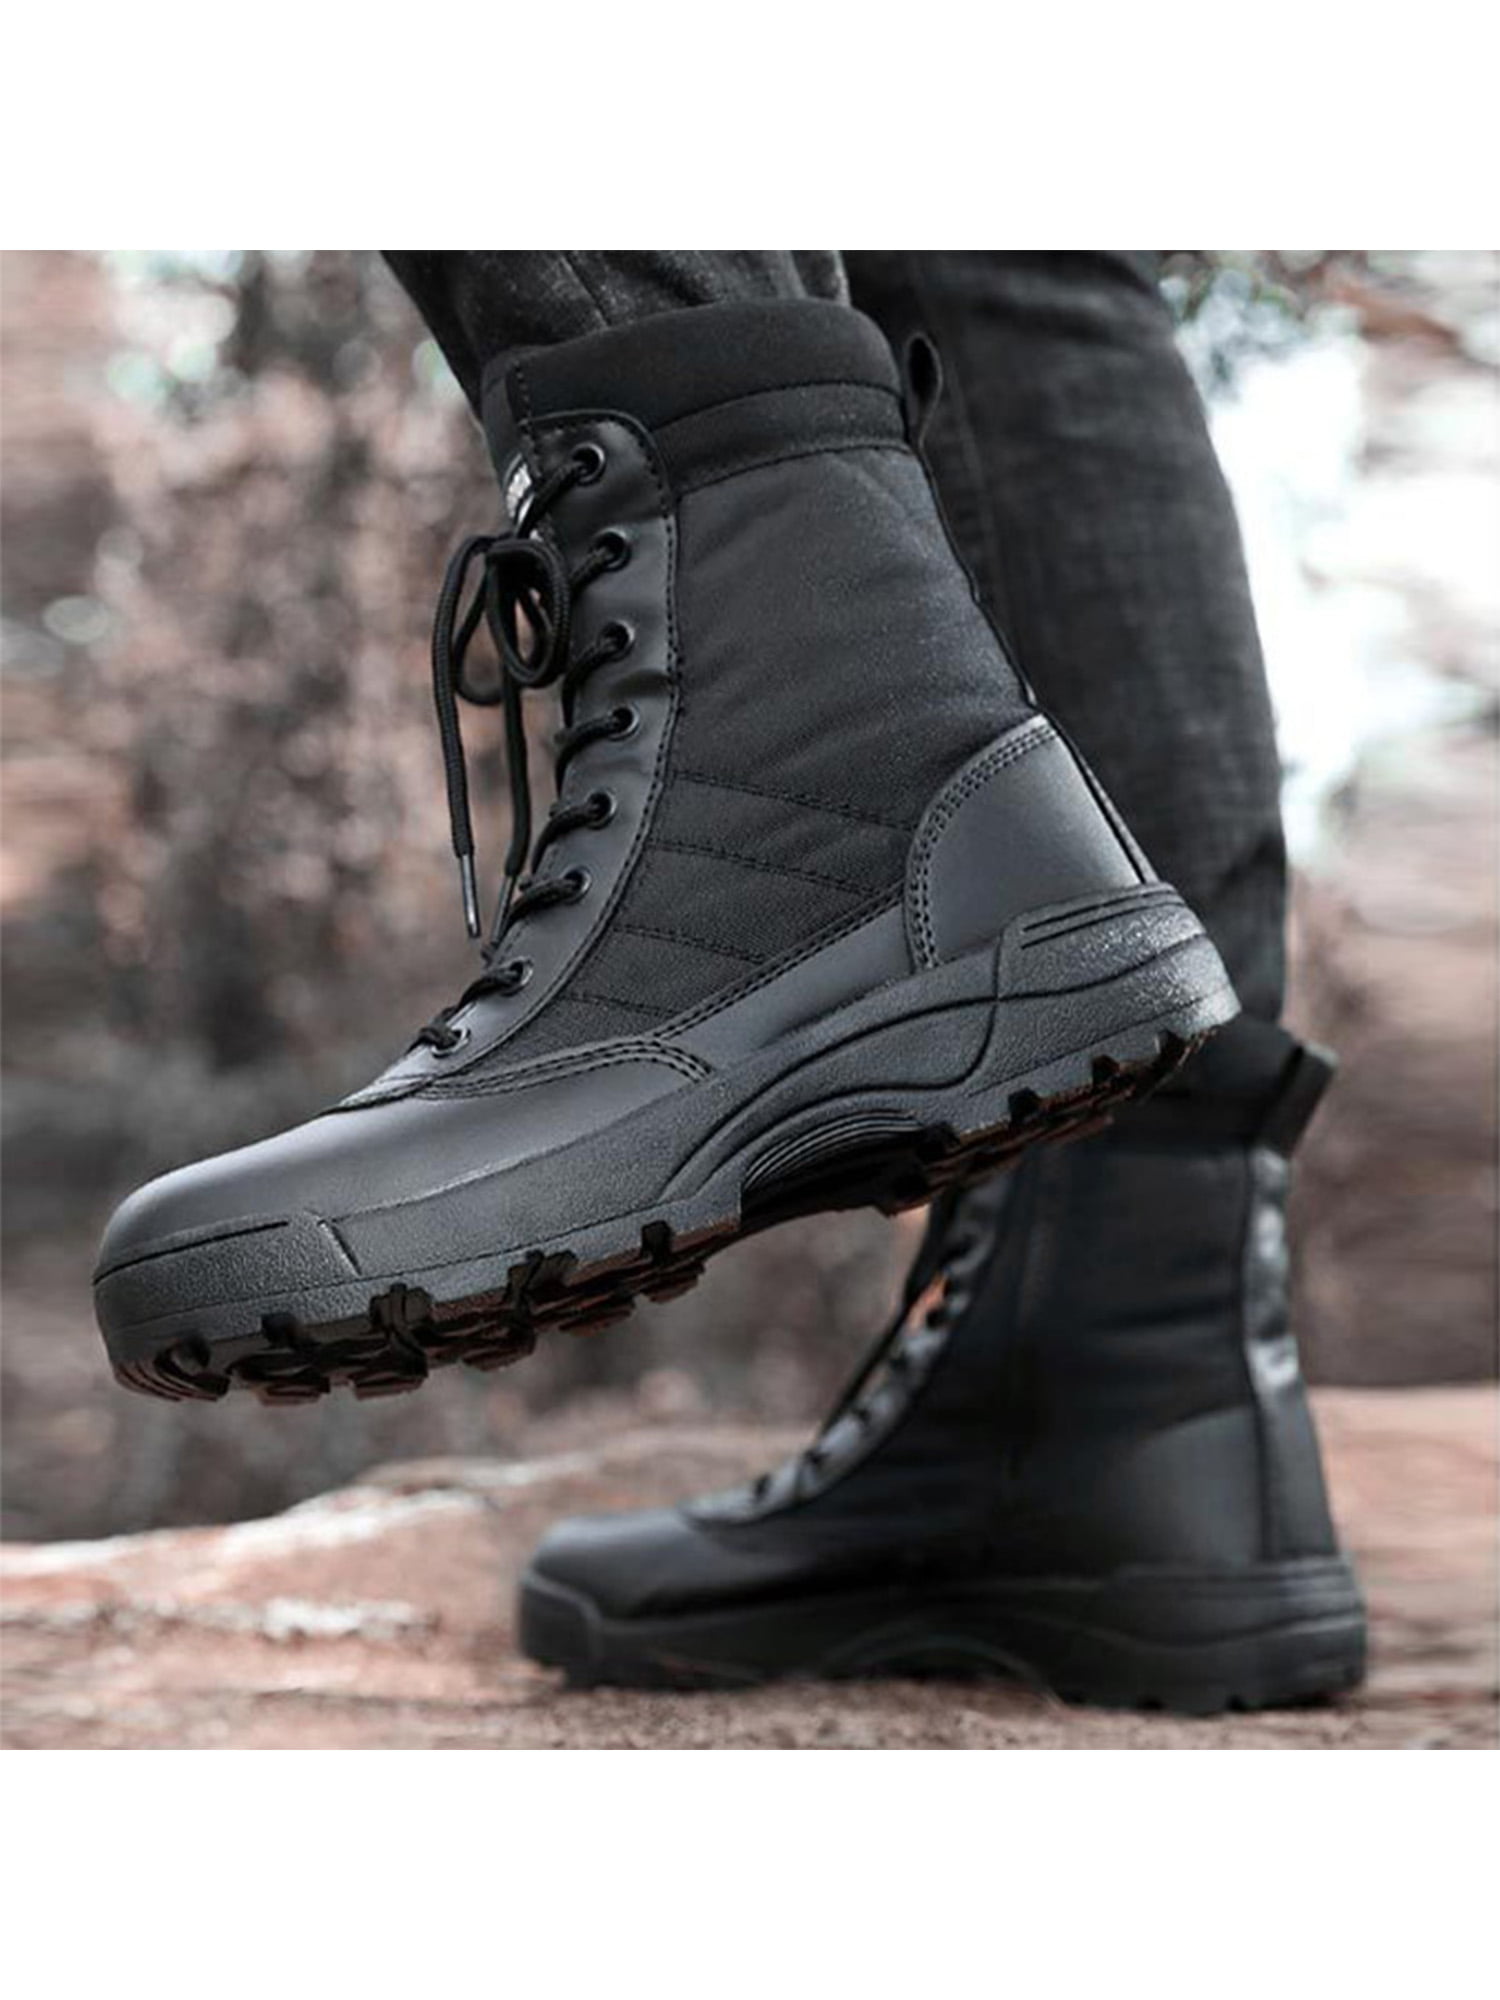 Mens New Leather Combat Lace Ankle Cowboy Military Desert Biker Boots Shoes Size 